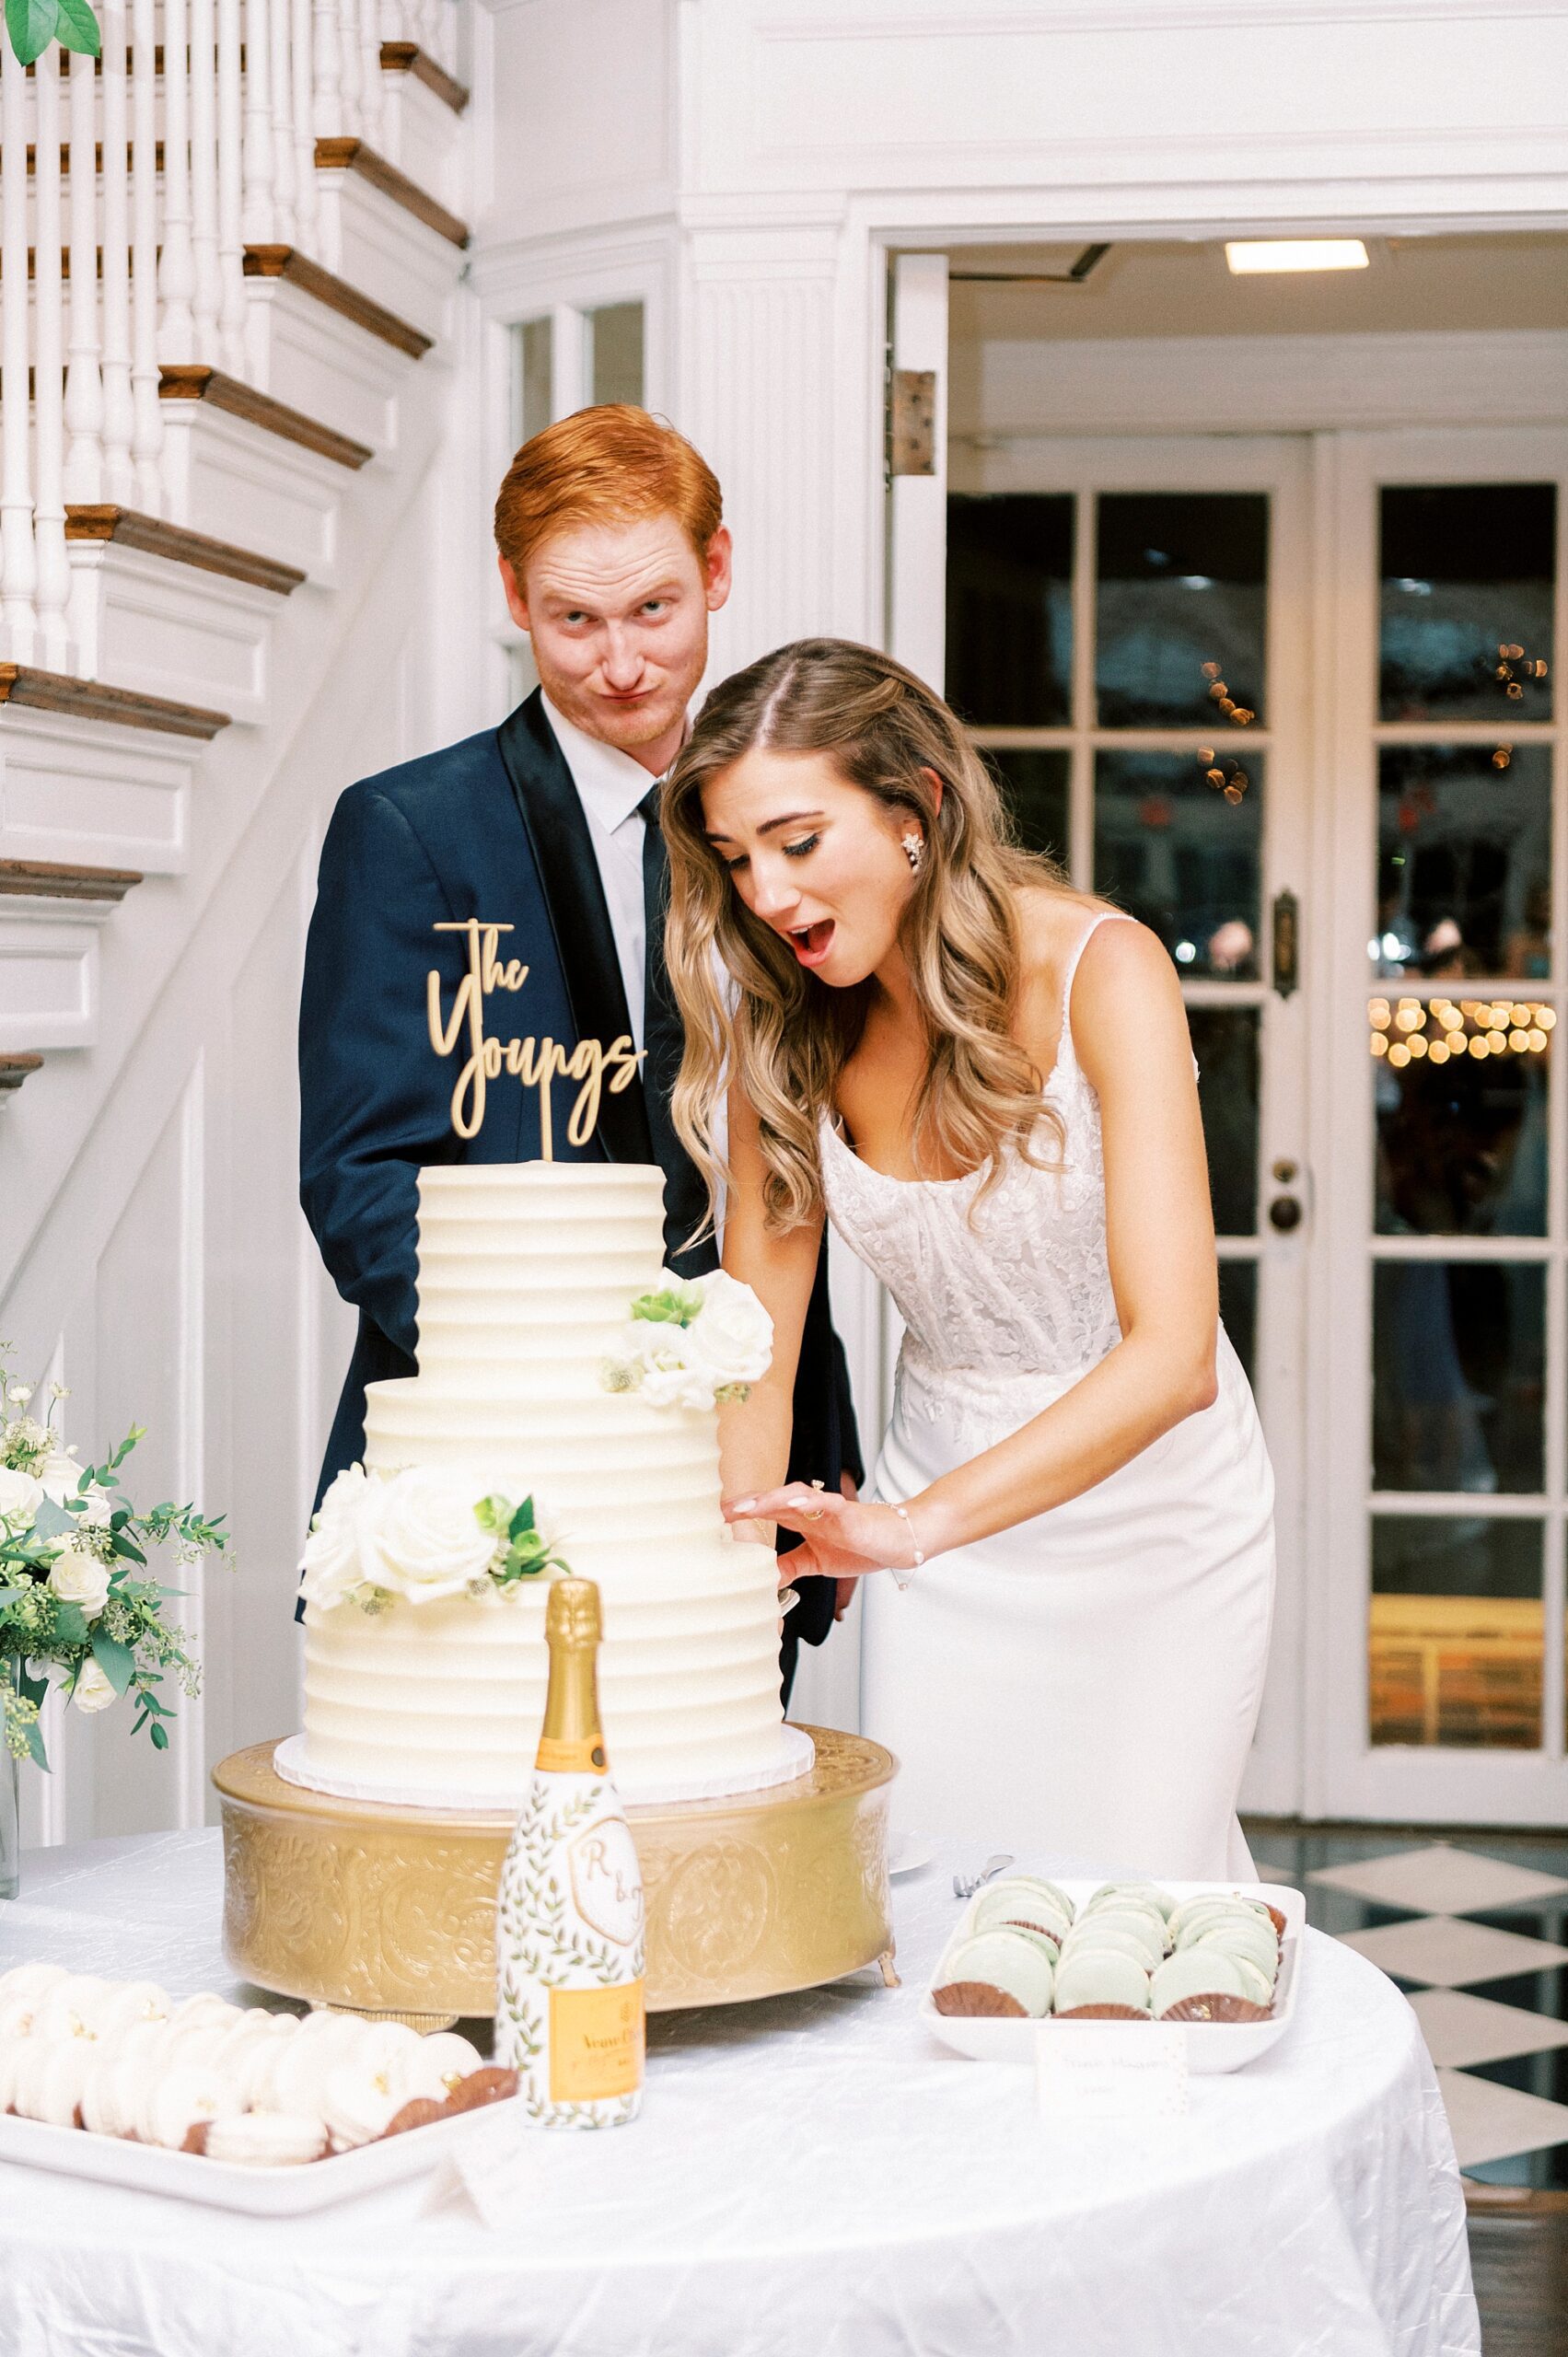 bride cuts wedding cake with groom during NC wedding reception